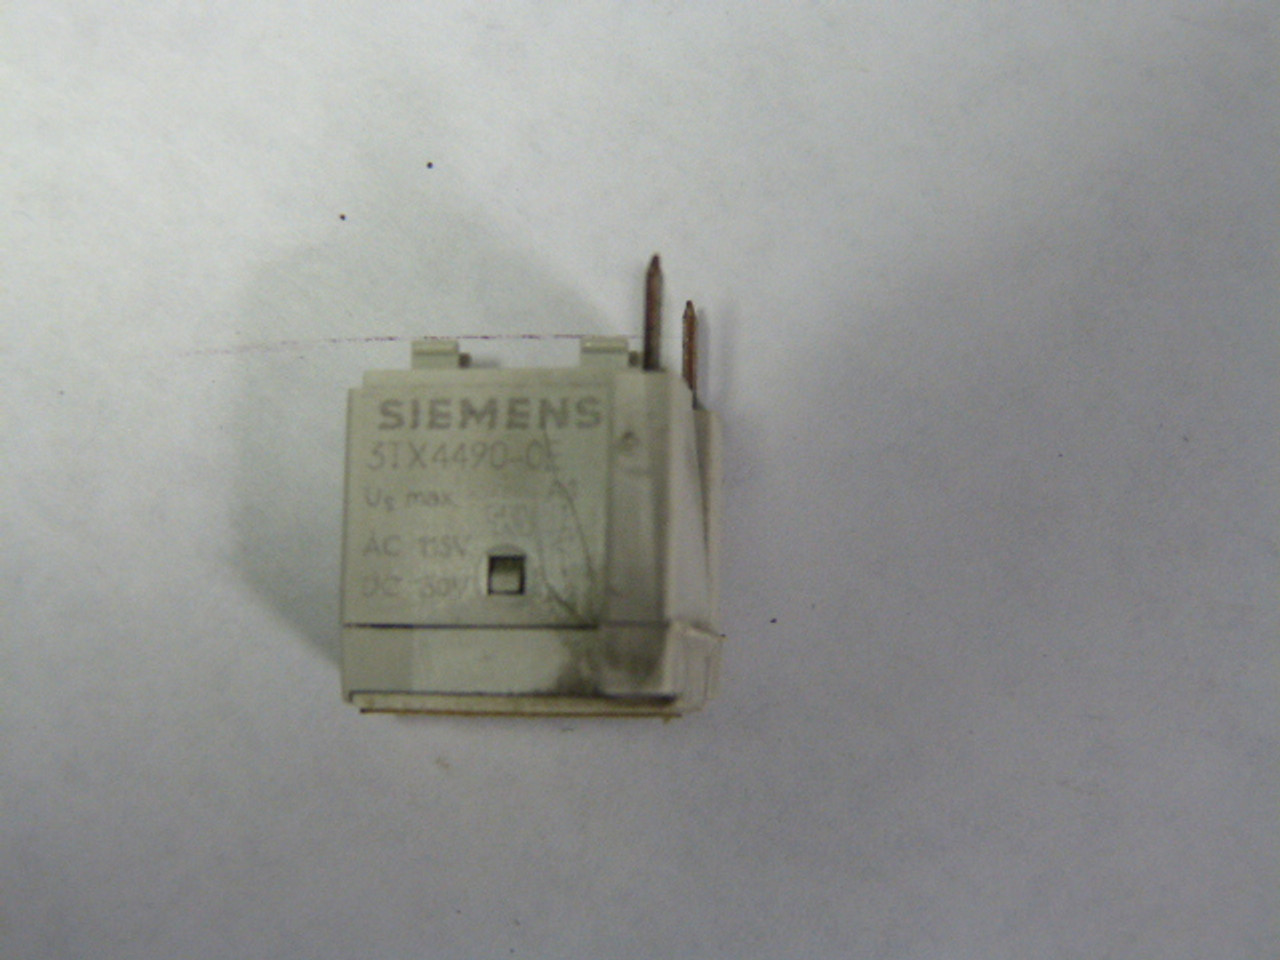 Siemens 3TX4490-OE Surge Suppressor Varistor 115V USED